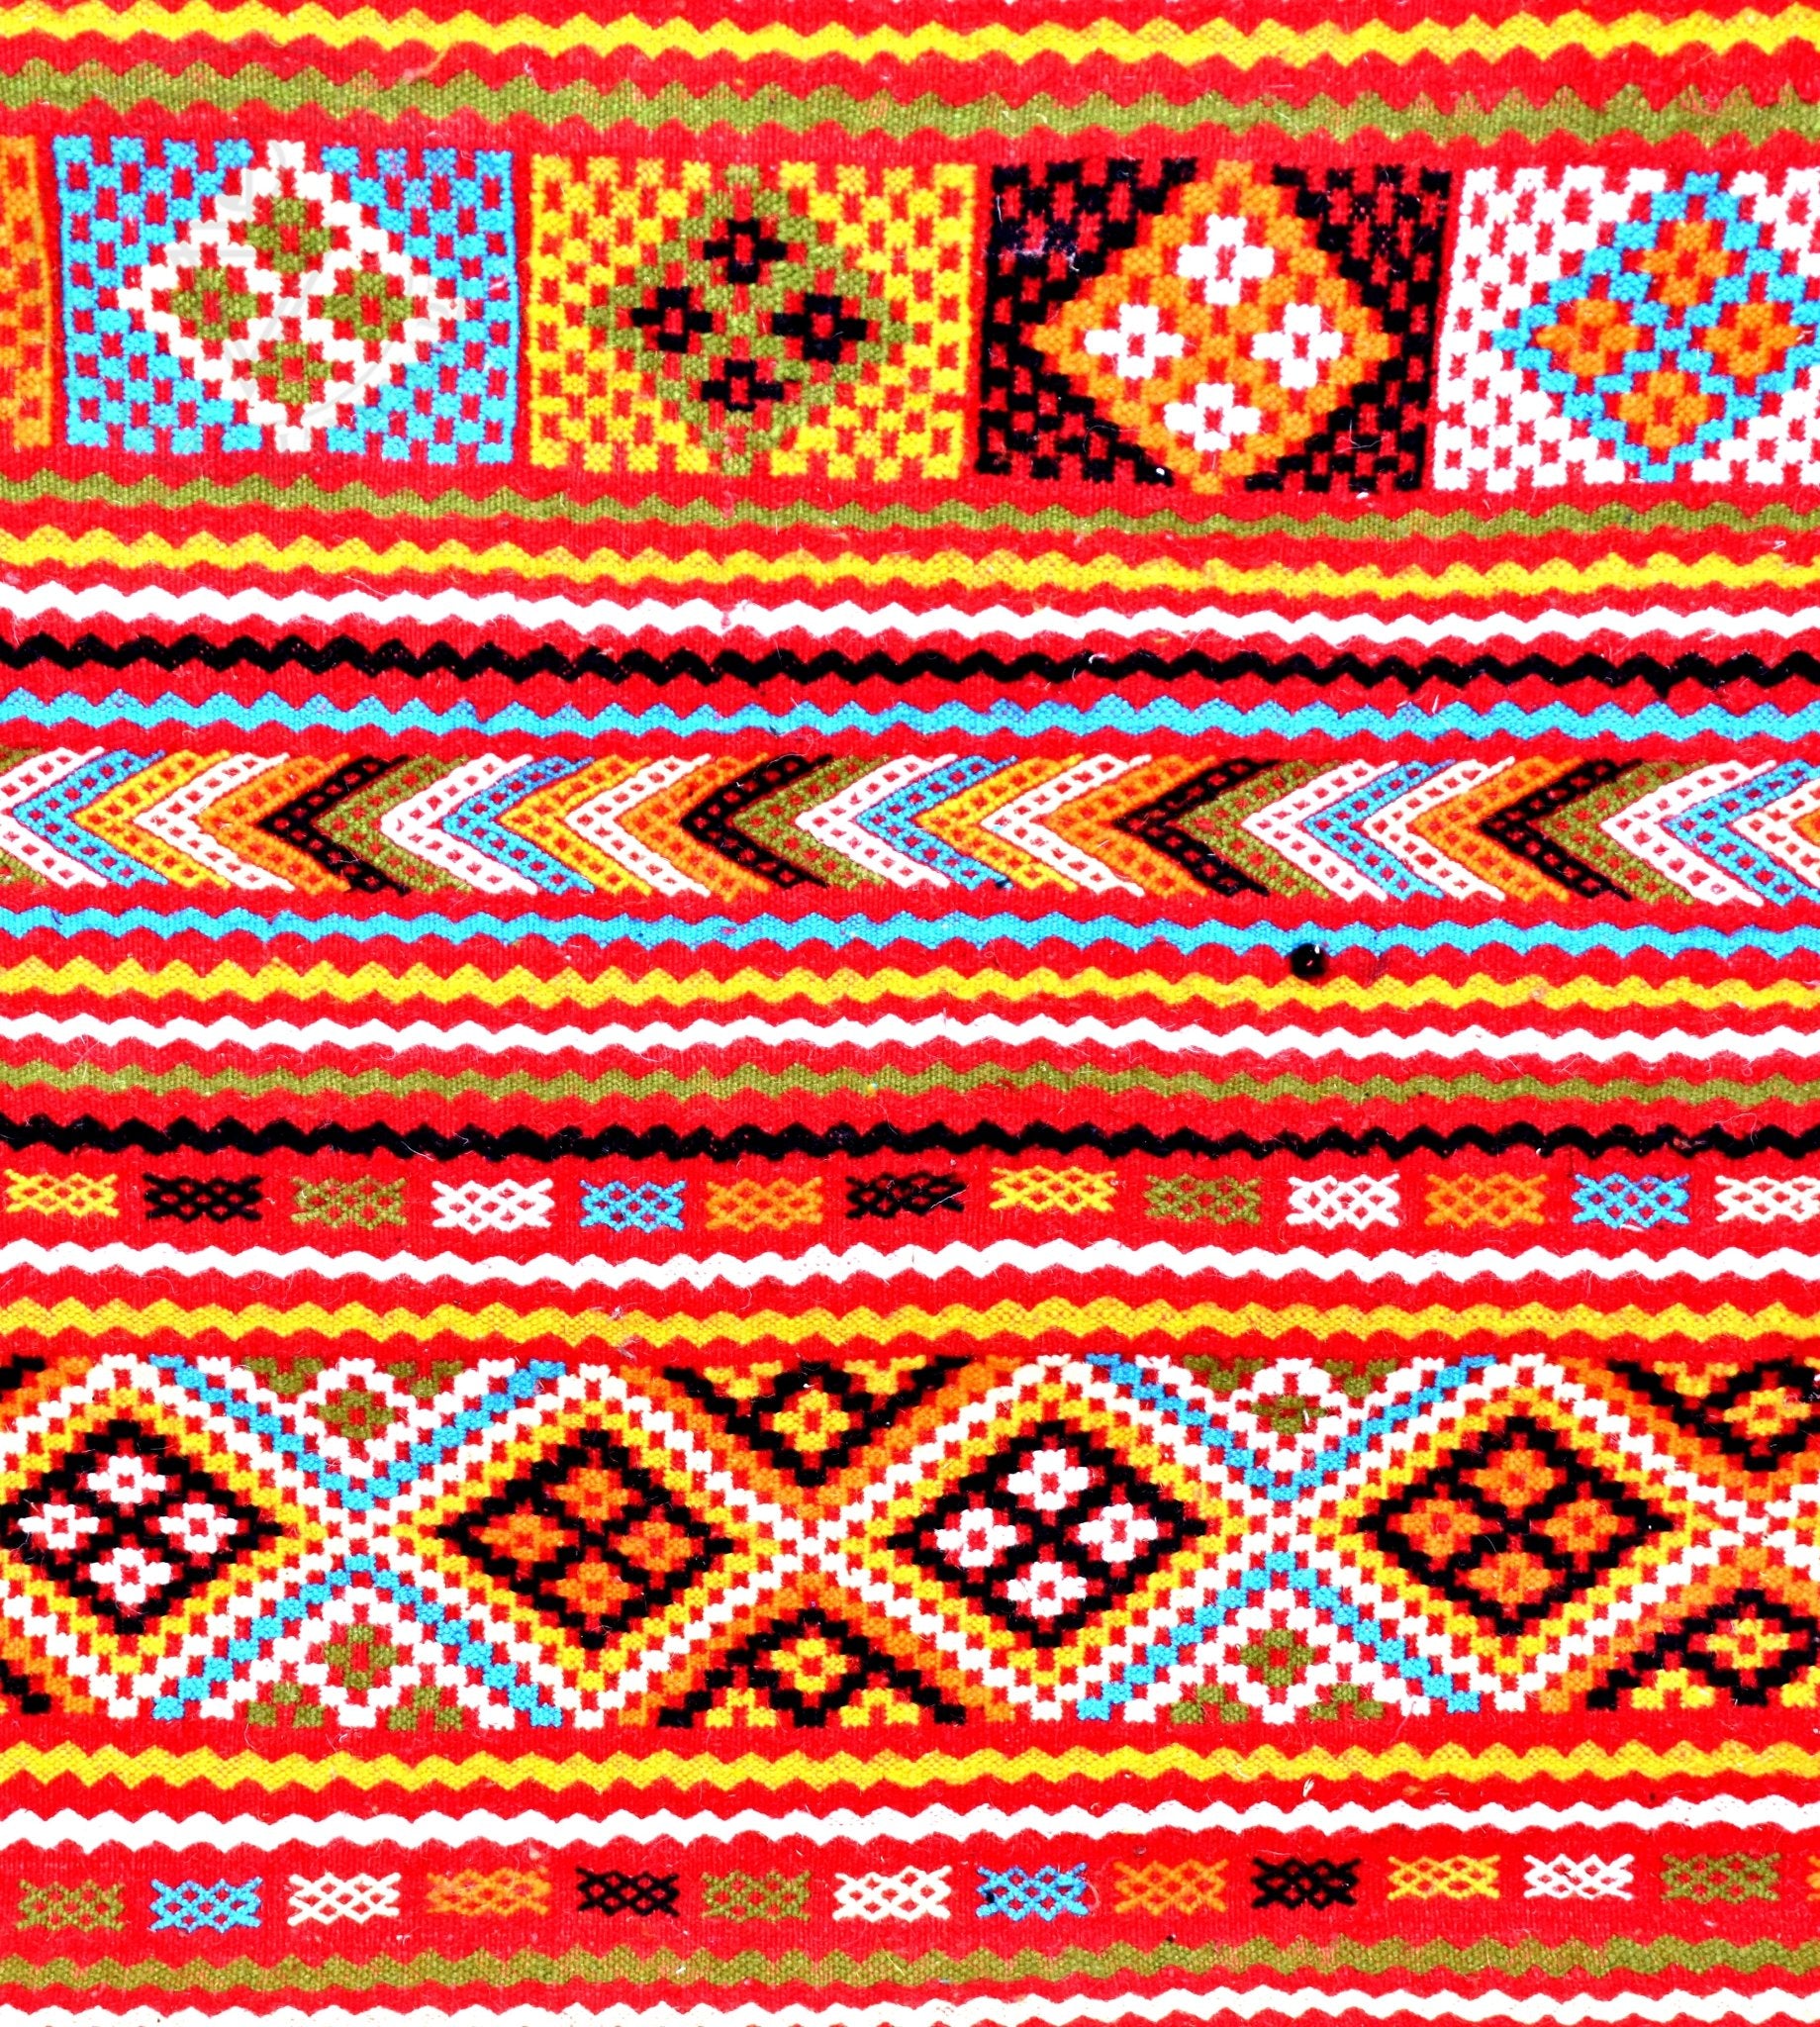 Flatweave kilim hanbal Moroccan rug - 4.11 x 8.04 ft / 125 x 245 cm - Berbers Market